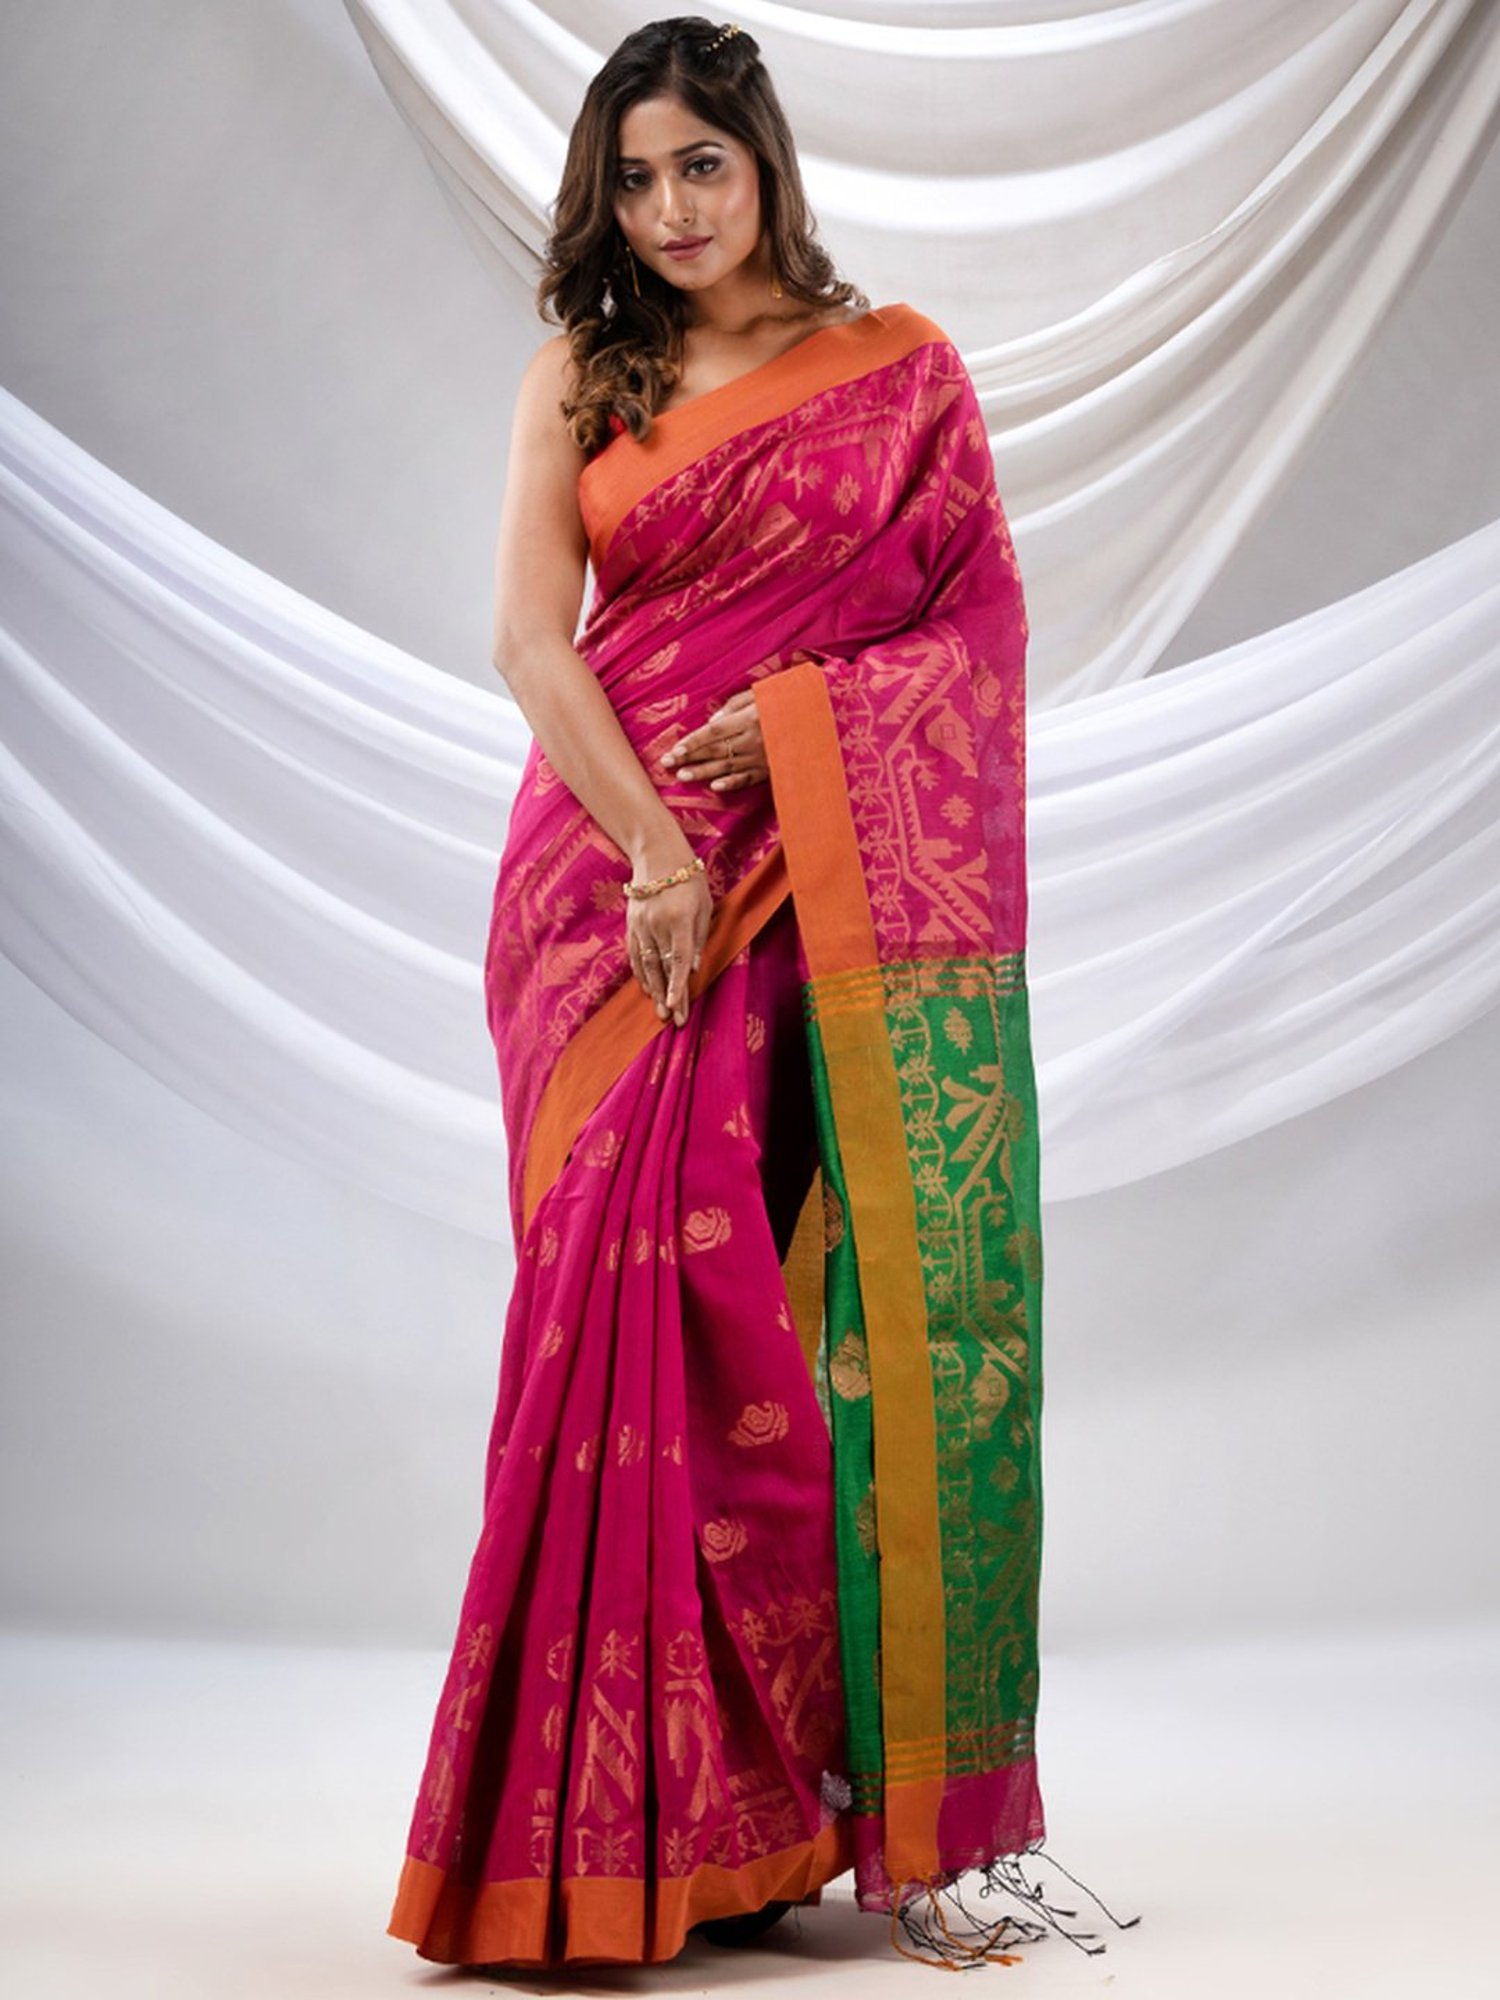 Green and pink bridal saree | Wedding saree blouse designs, Latest bridal  blouse designs, Cutwork blouse designs